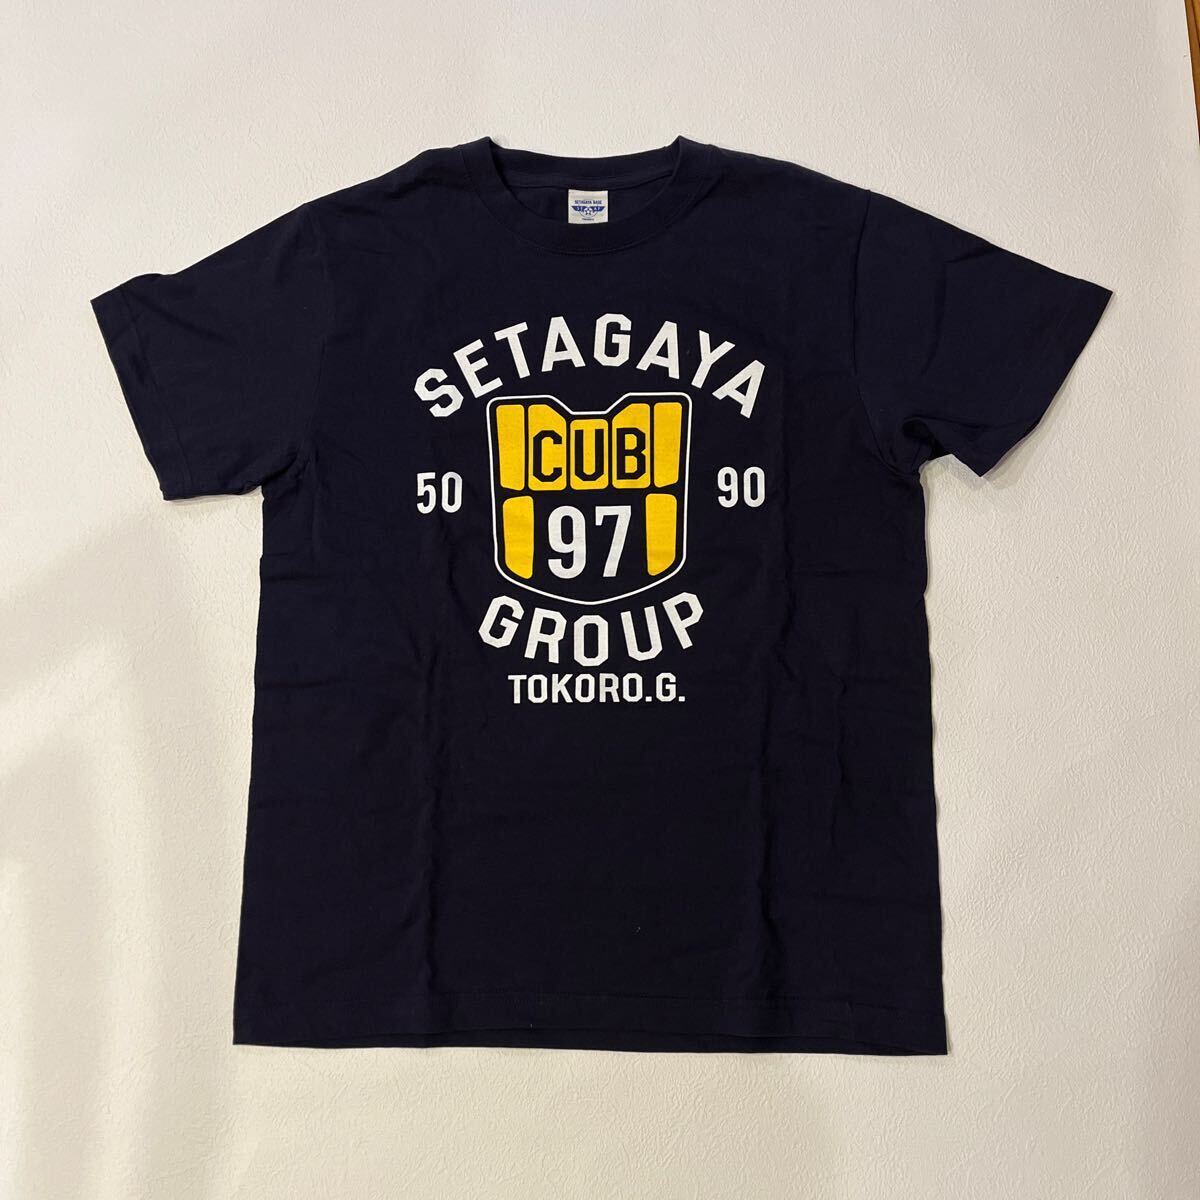  Setagaya основа футболка M размер не использовался товар 